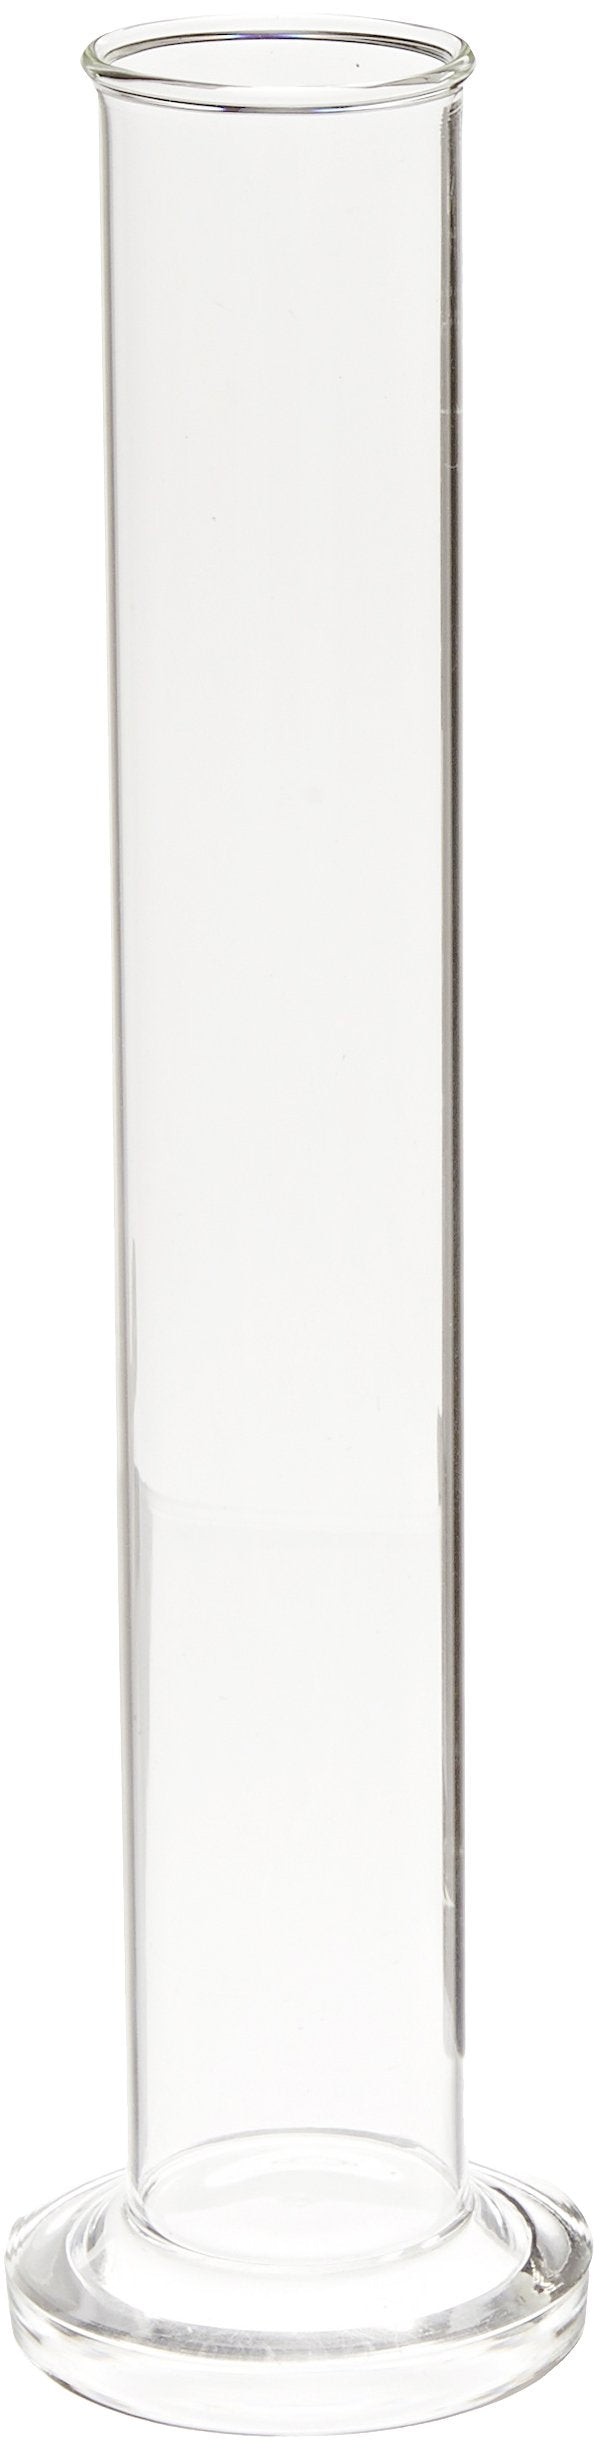  [AUSTRALIA] - United Scientific HYC500 Borosilicate Glass Hydrometer Cylinder, 500ml Capacity